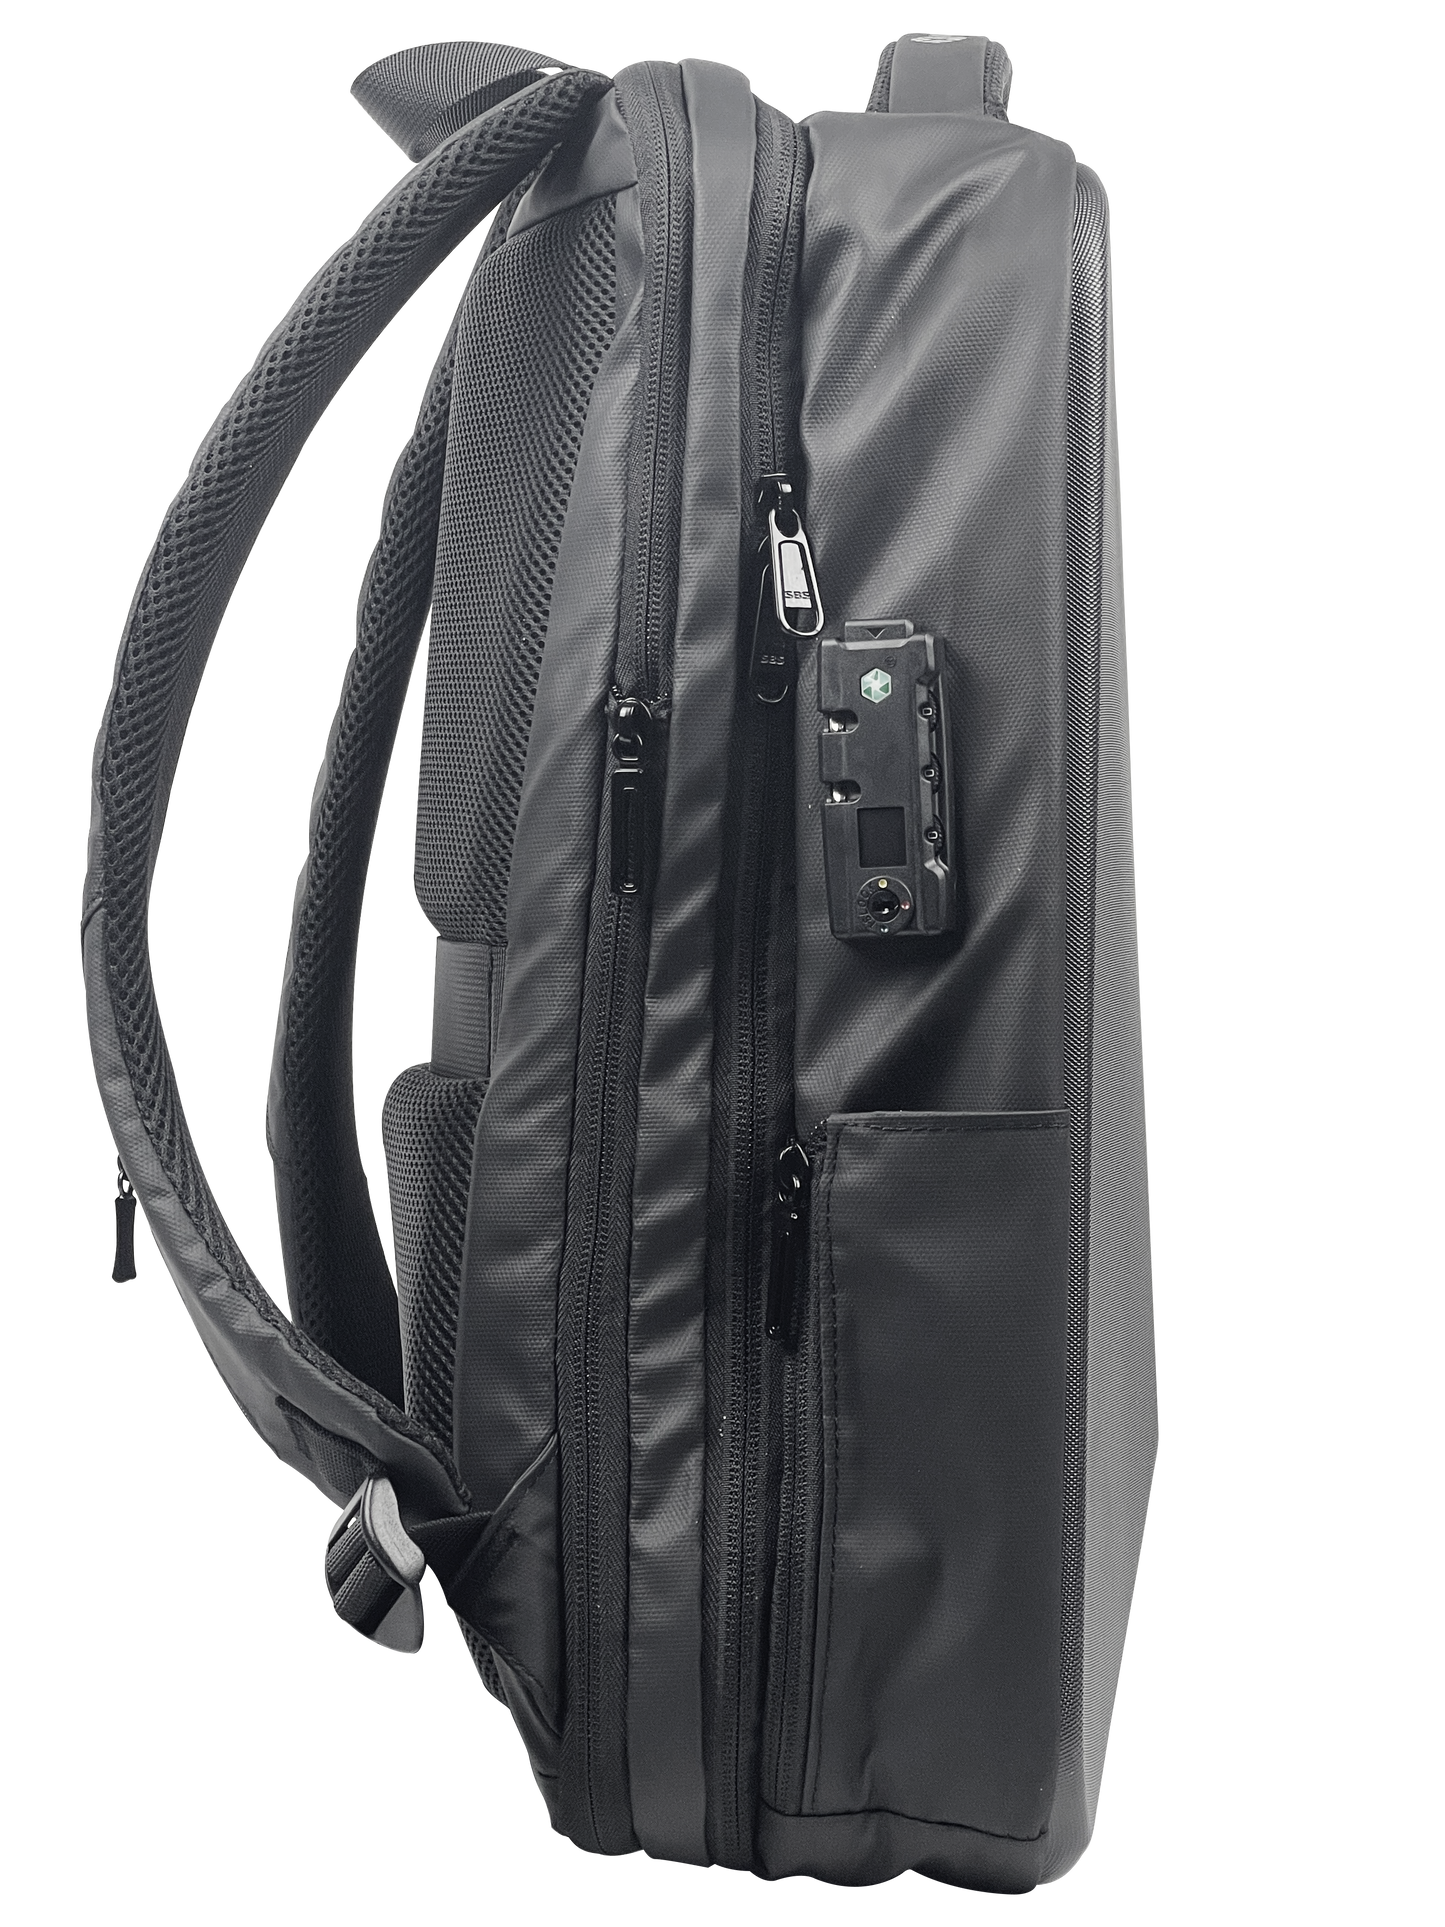 XOTIC PC Black Hardshell Anti Theft Waterproof Backpack